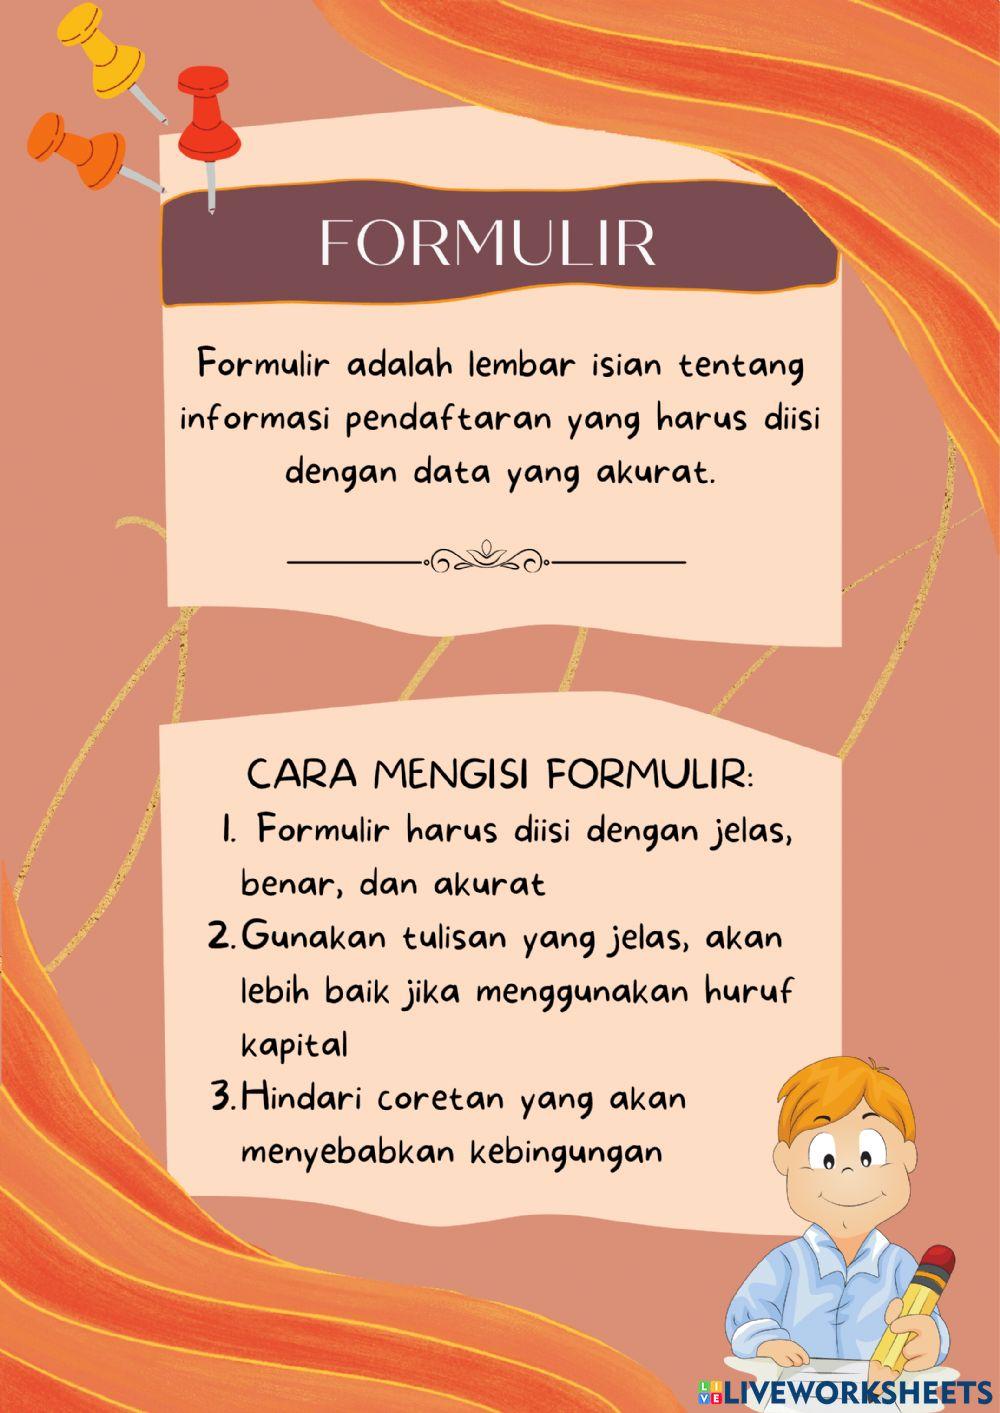 Tema 5 wirausaha muatan bahasa indonesia